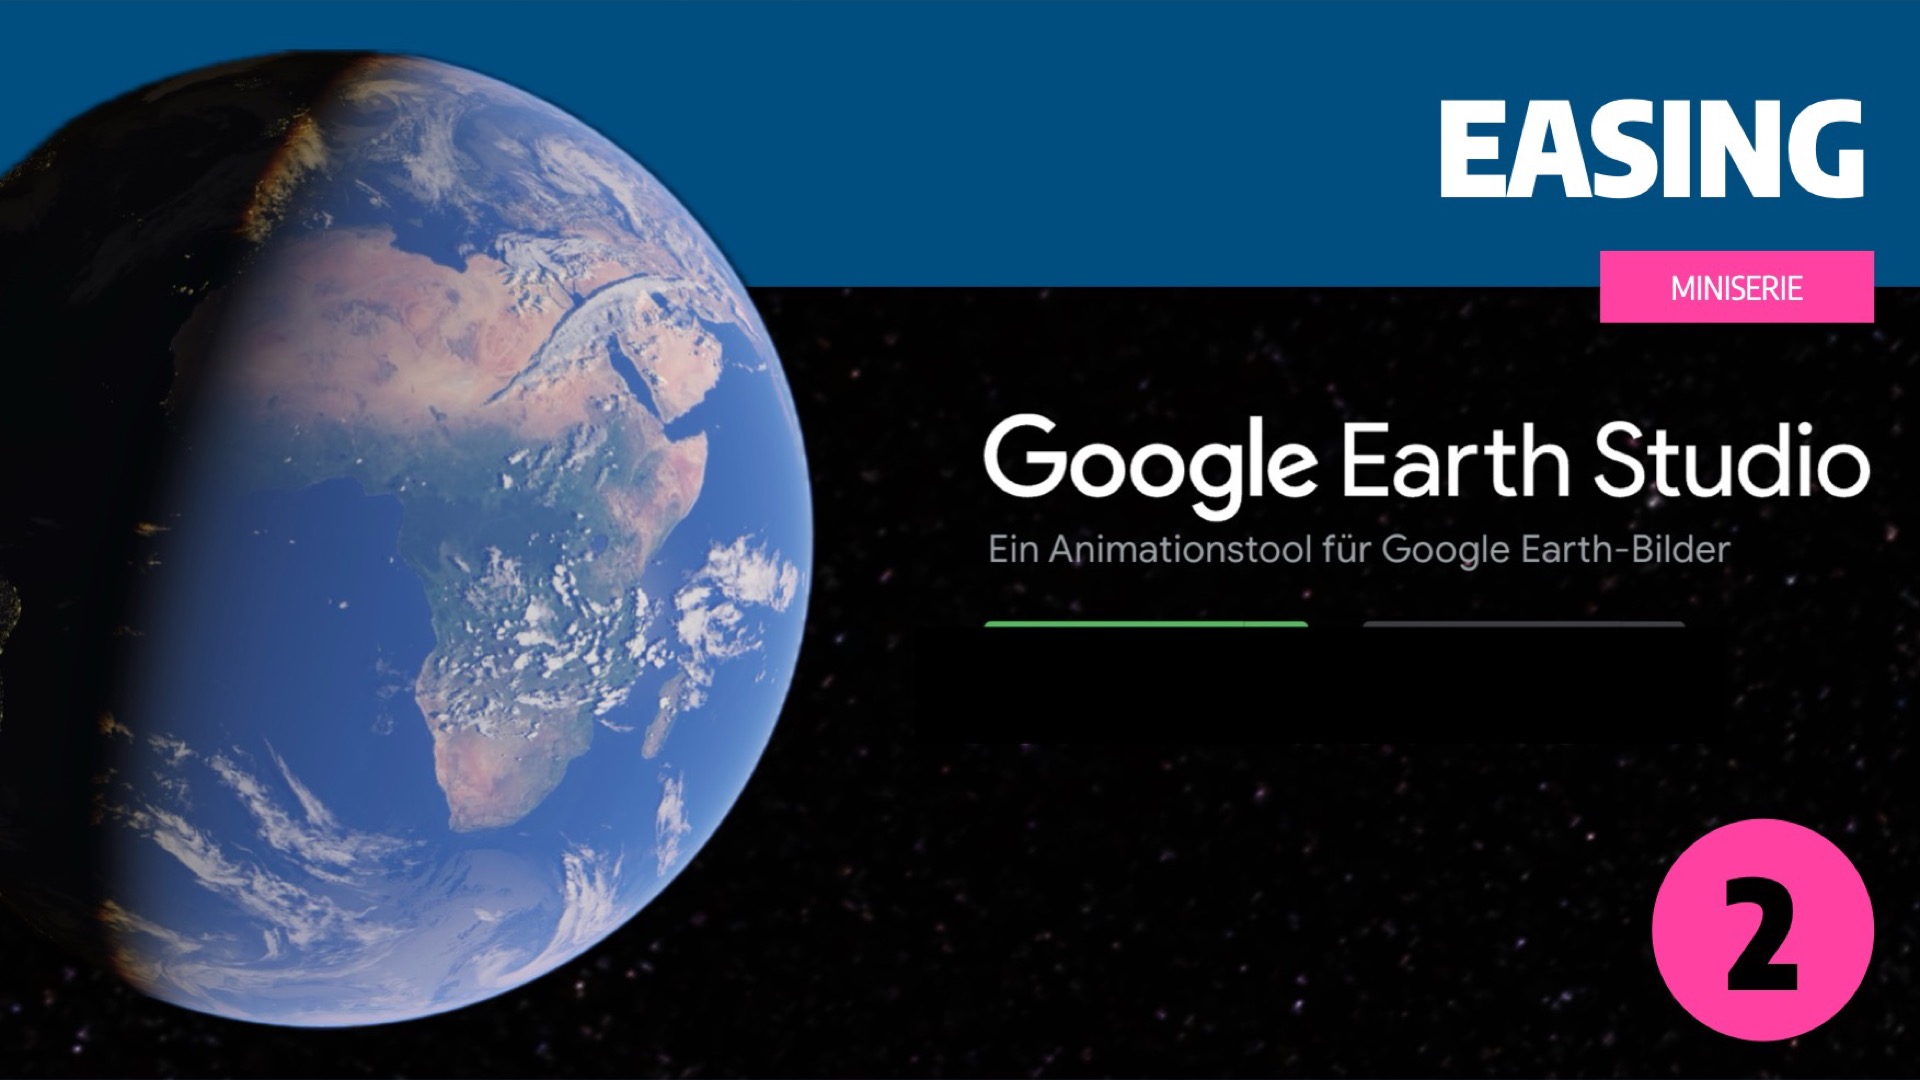 Image for Google Earth Studio - Teil 2: Easing